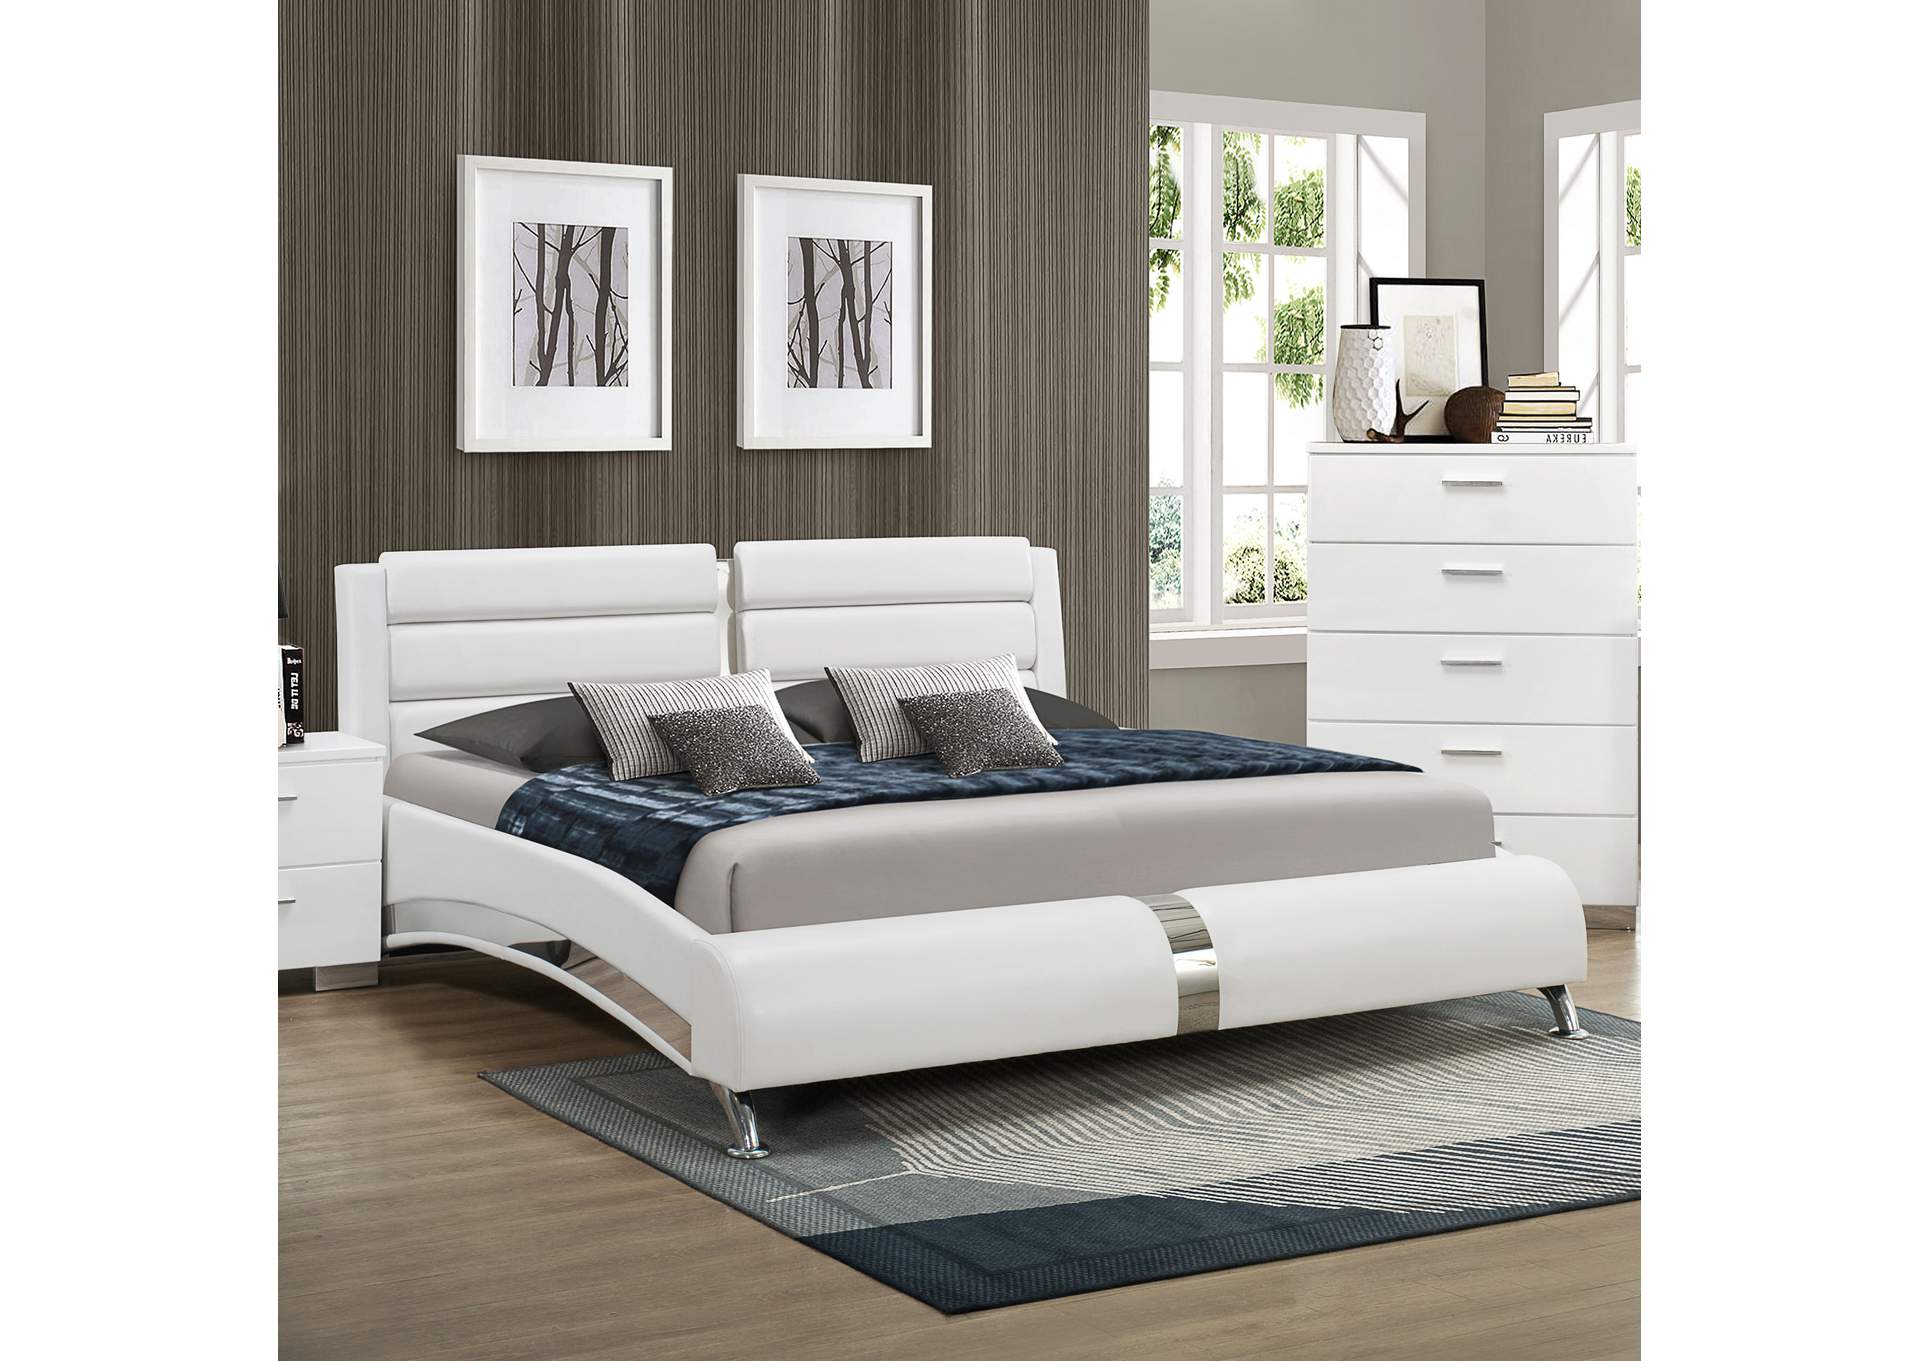 Jeremaine California King Upholstered Bed White,Coaster Furniture